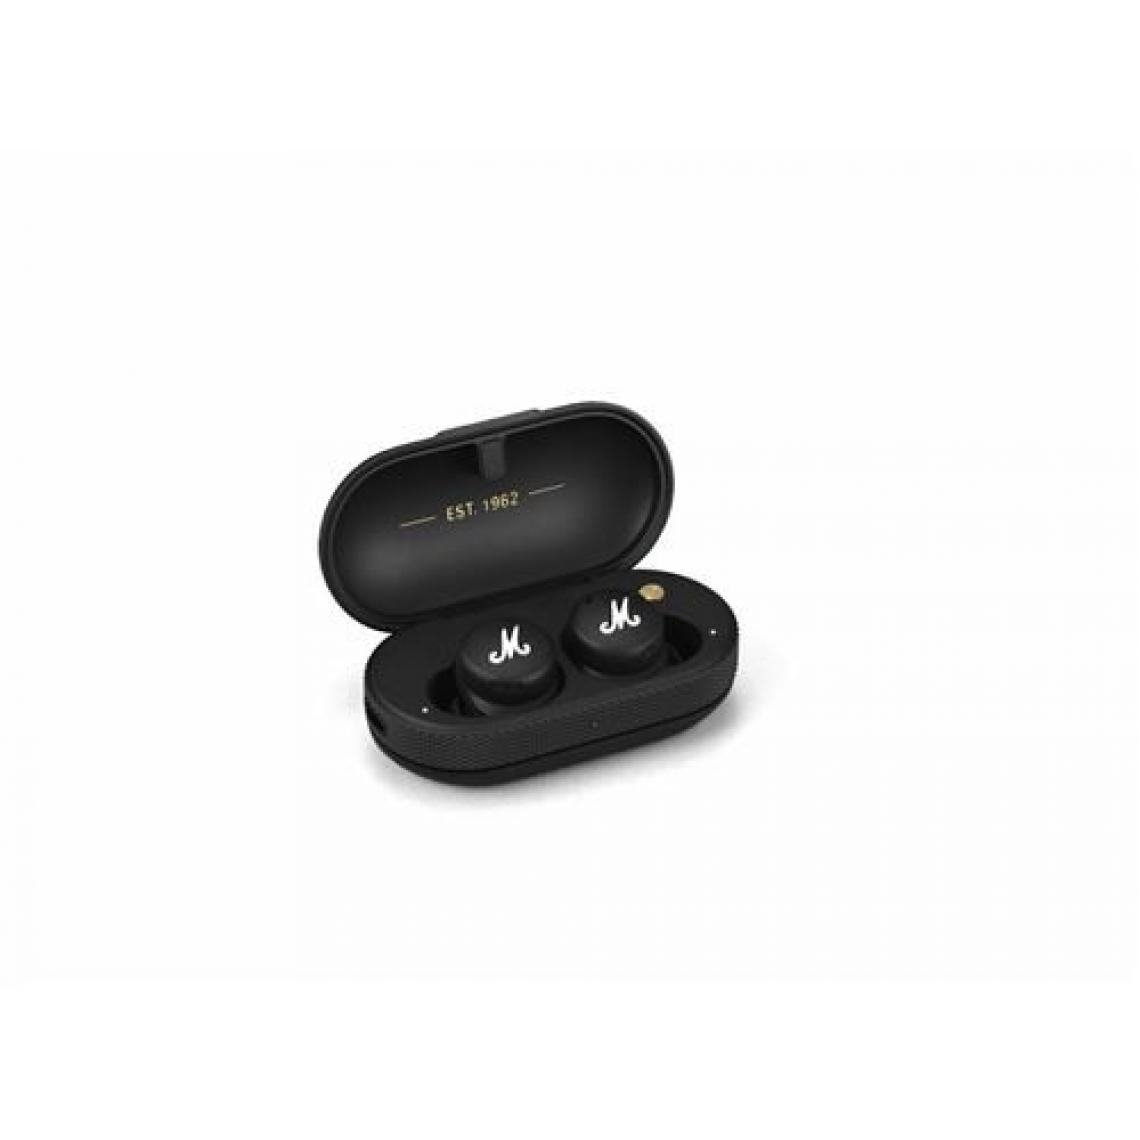 Marshall - Ecouteurs sans fil Bluetooth Marshall Mode II True Wireless Noir - Casque